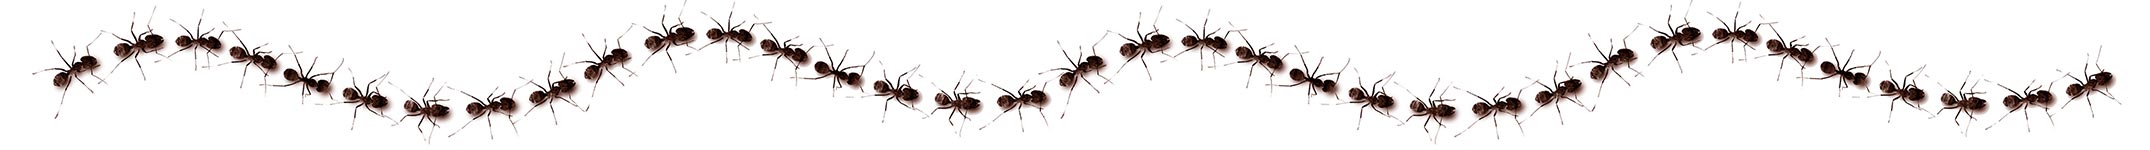 Crawling Ants Border